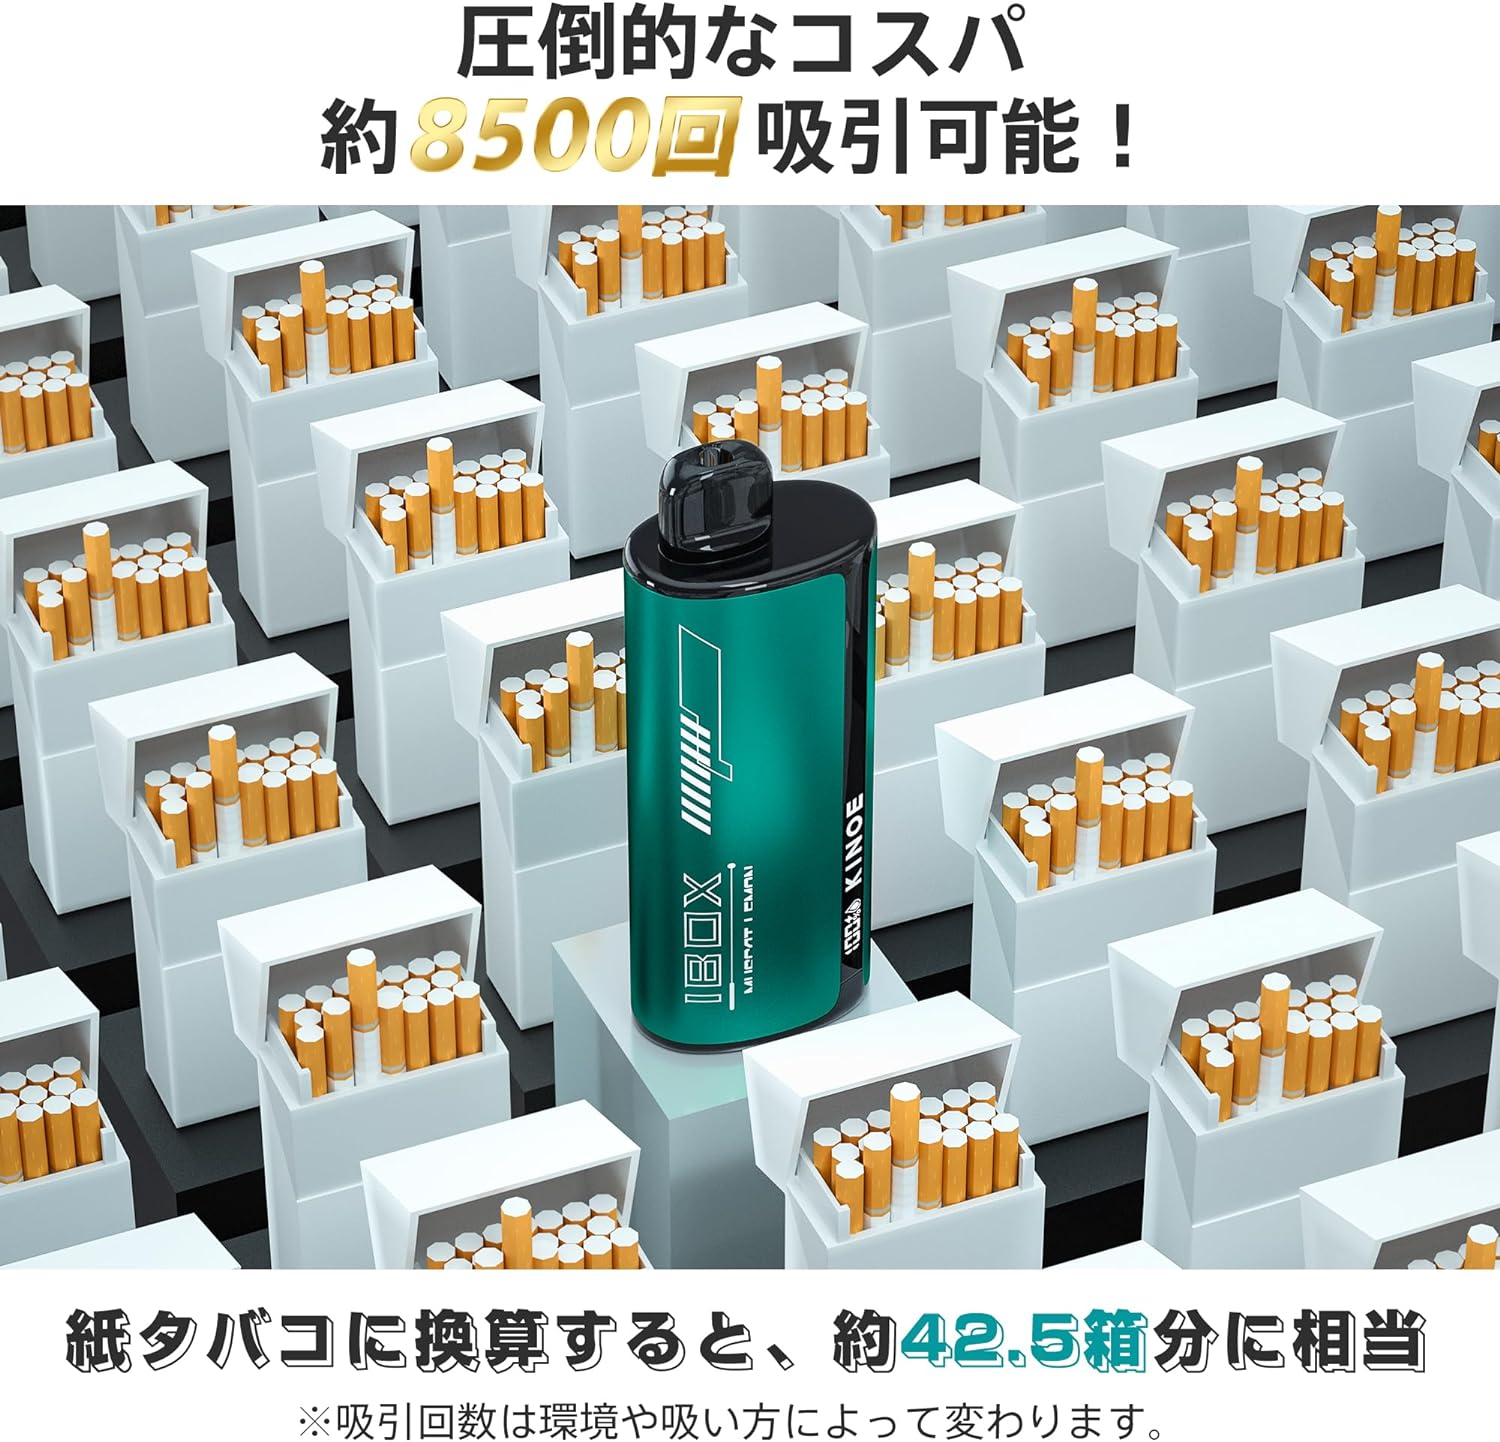 605t1634☆ 電子タバコ VAPE ベイプ シーシャ 8500回吸引可能 ゼロ スーパー清涼感 爆煙 大容量 使い捨て LEDモニター搭載